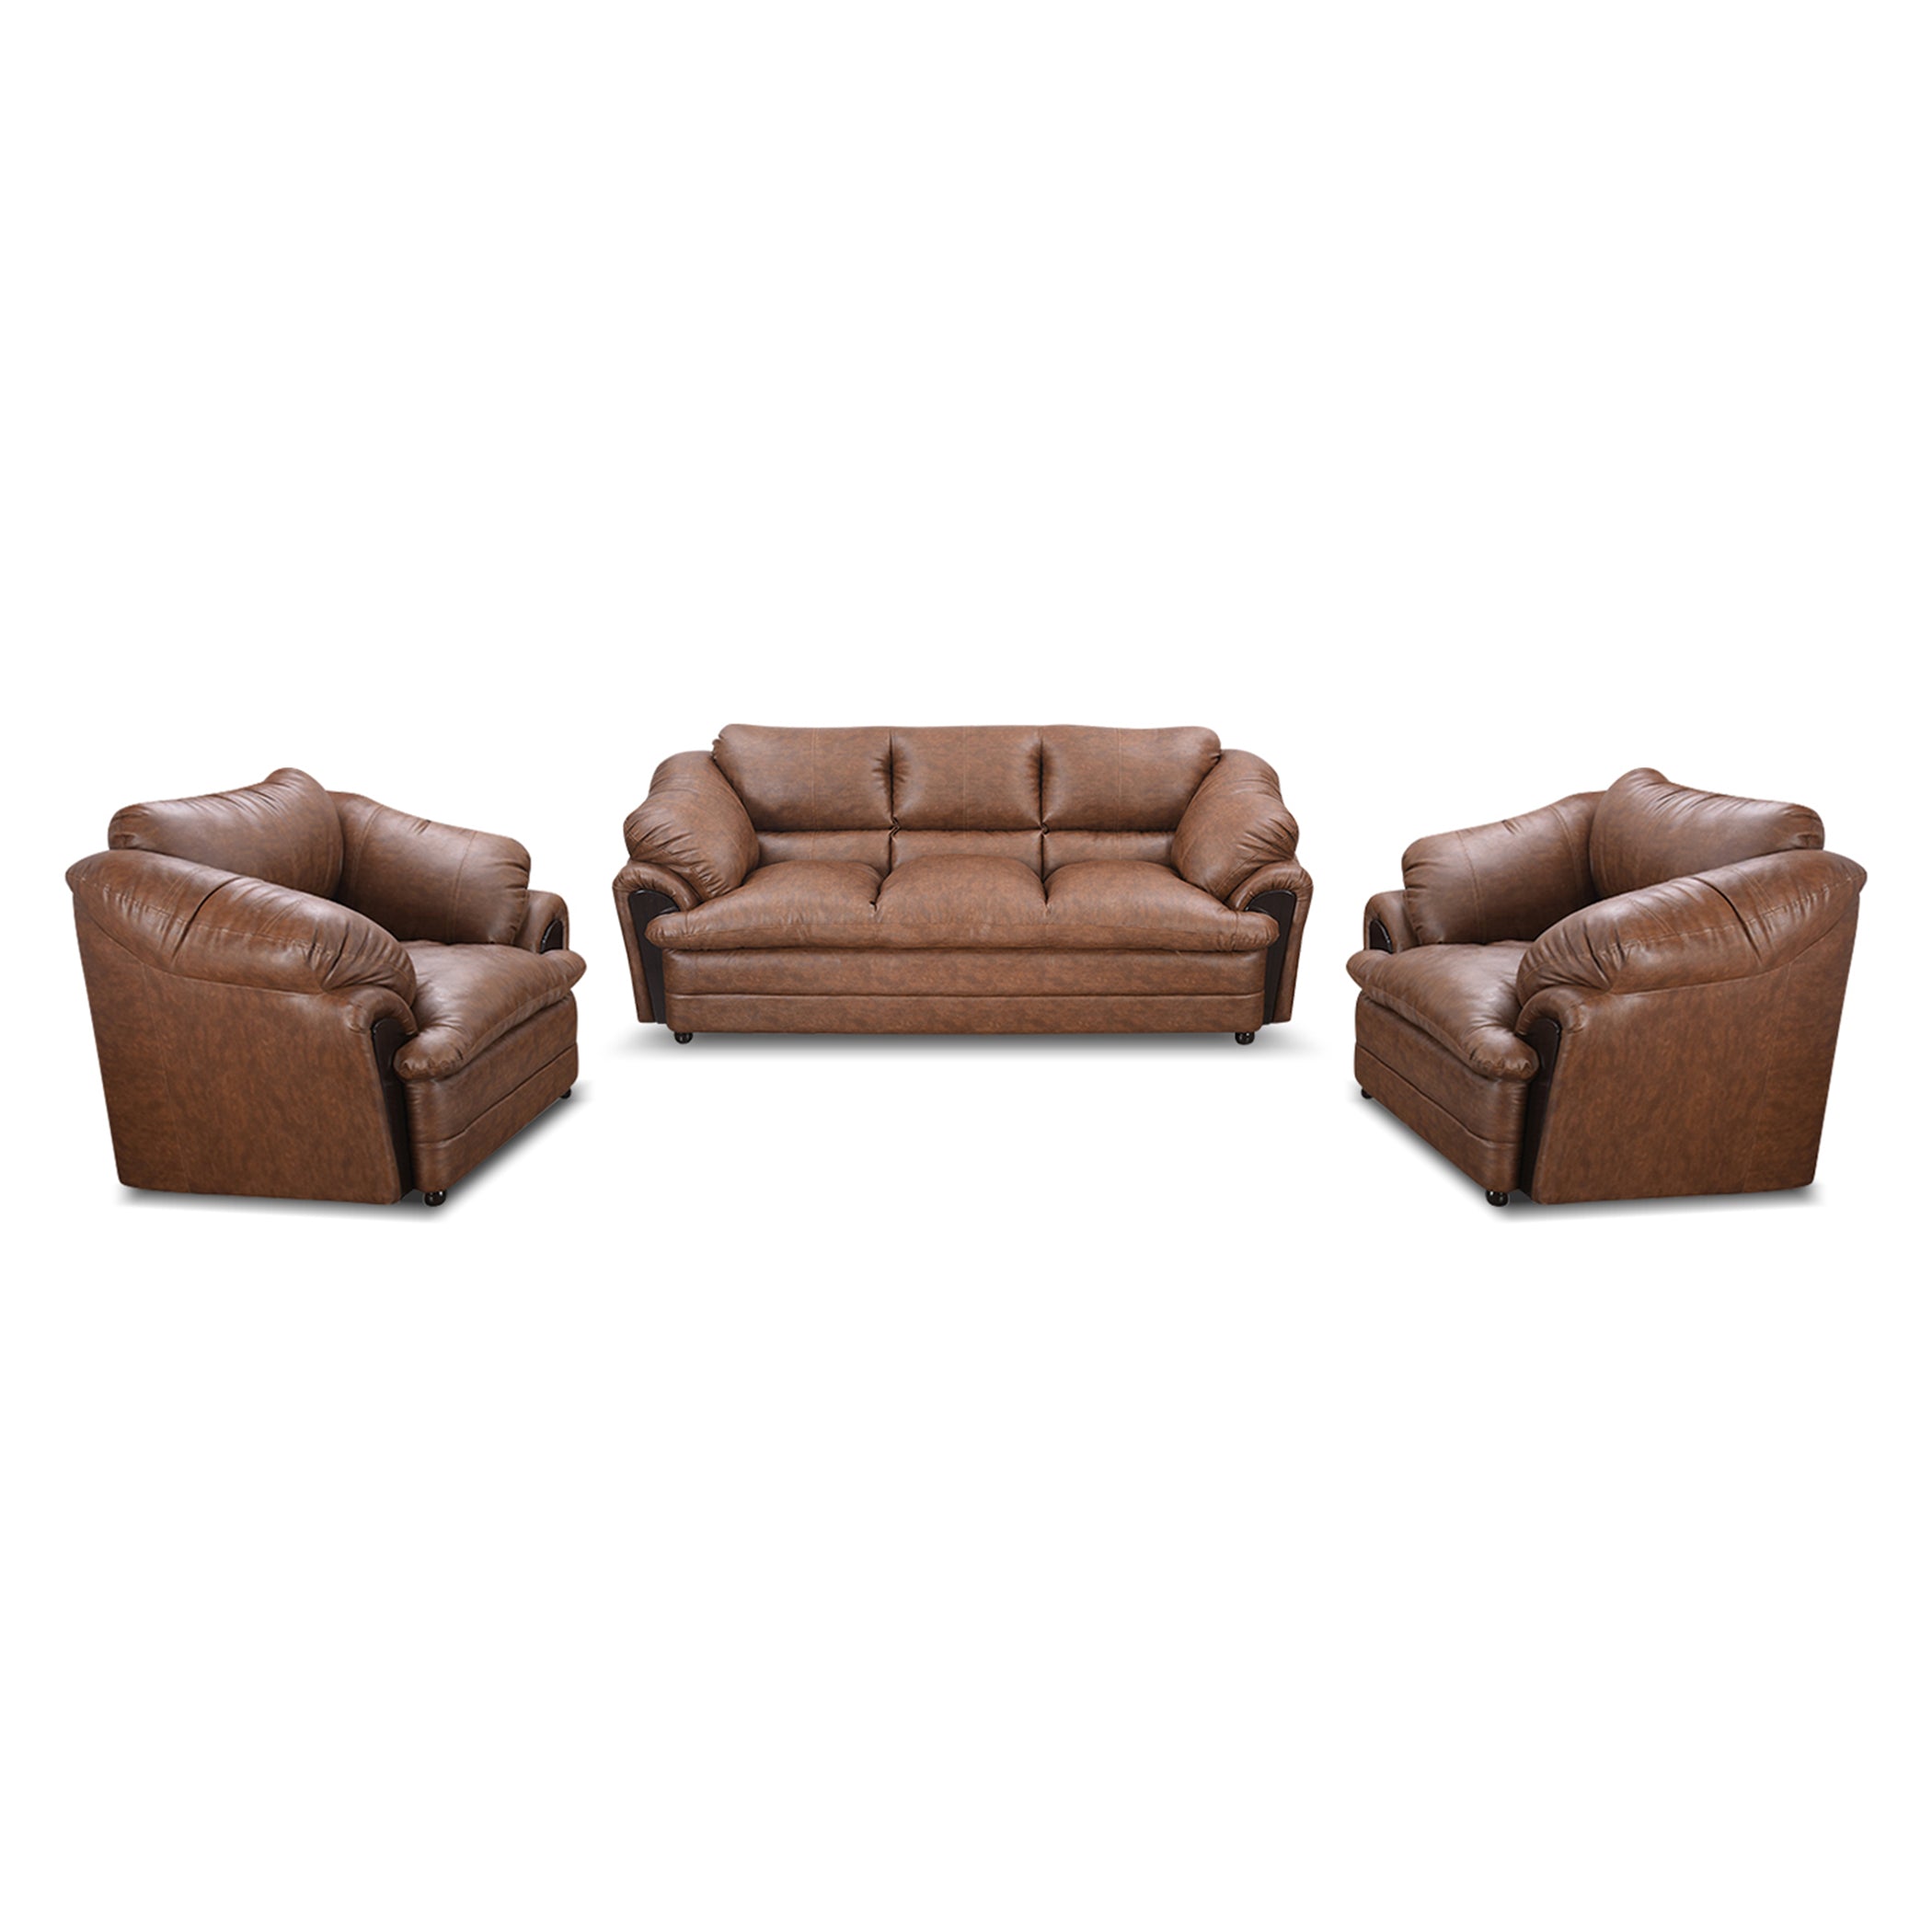 Coppenhagen Brown 3S Sofa by Zorin Zorin